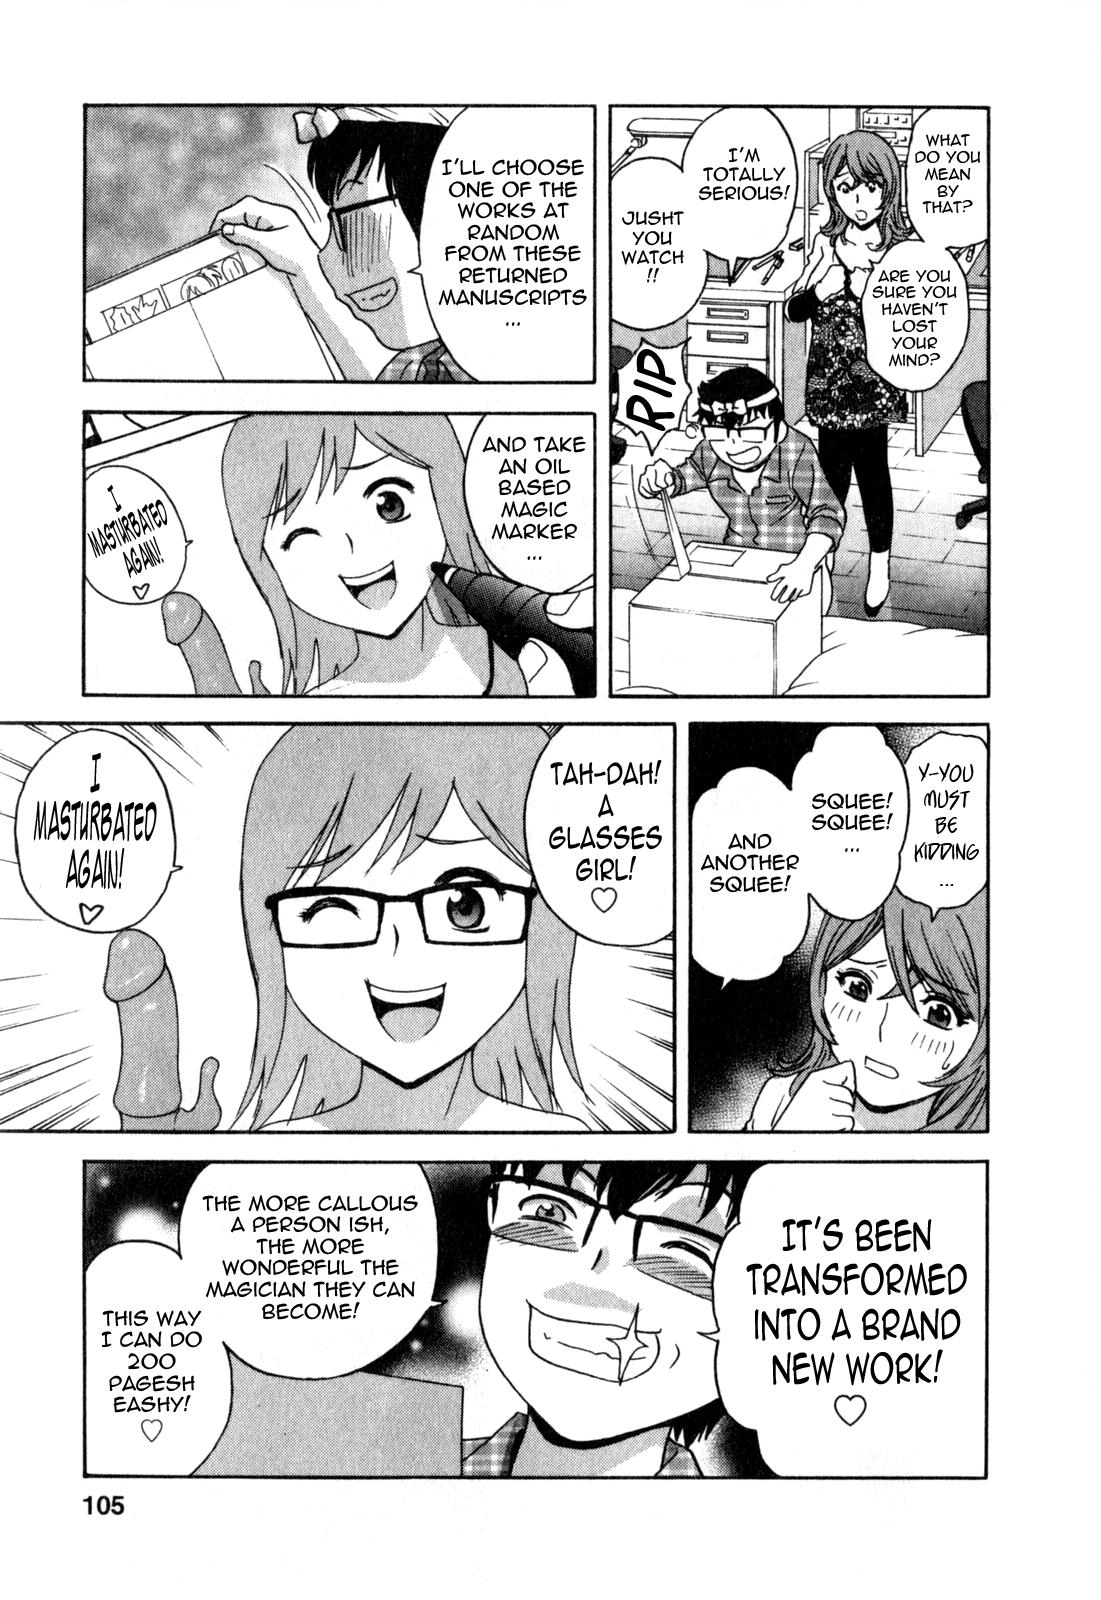 Life with Married Women Just Like a Manga 3 106